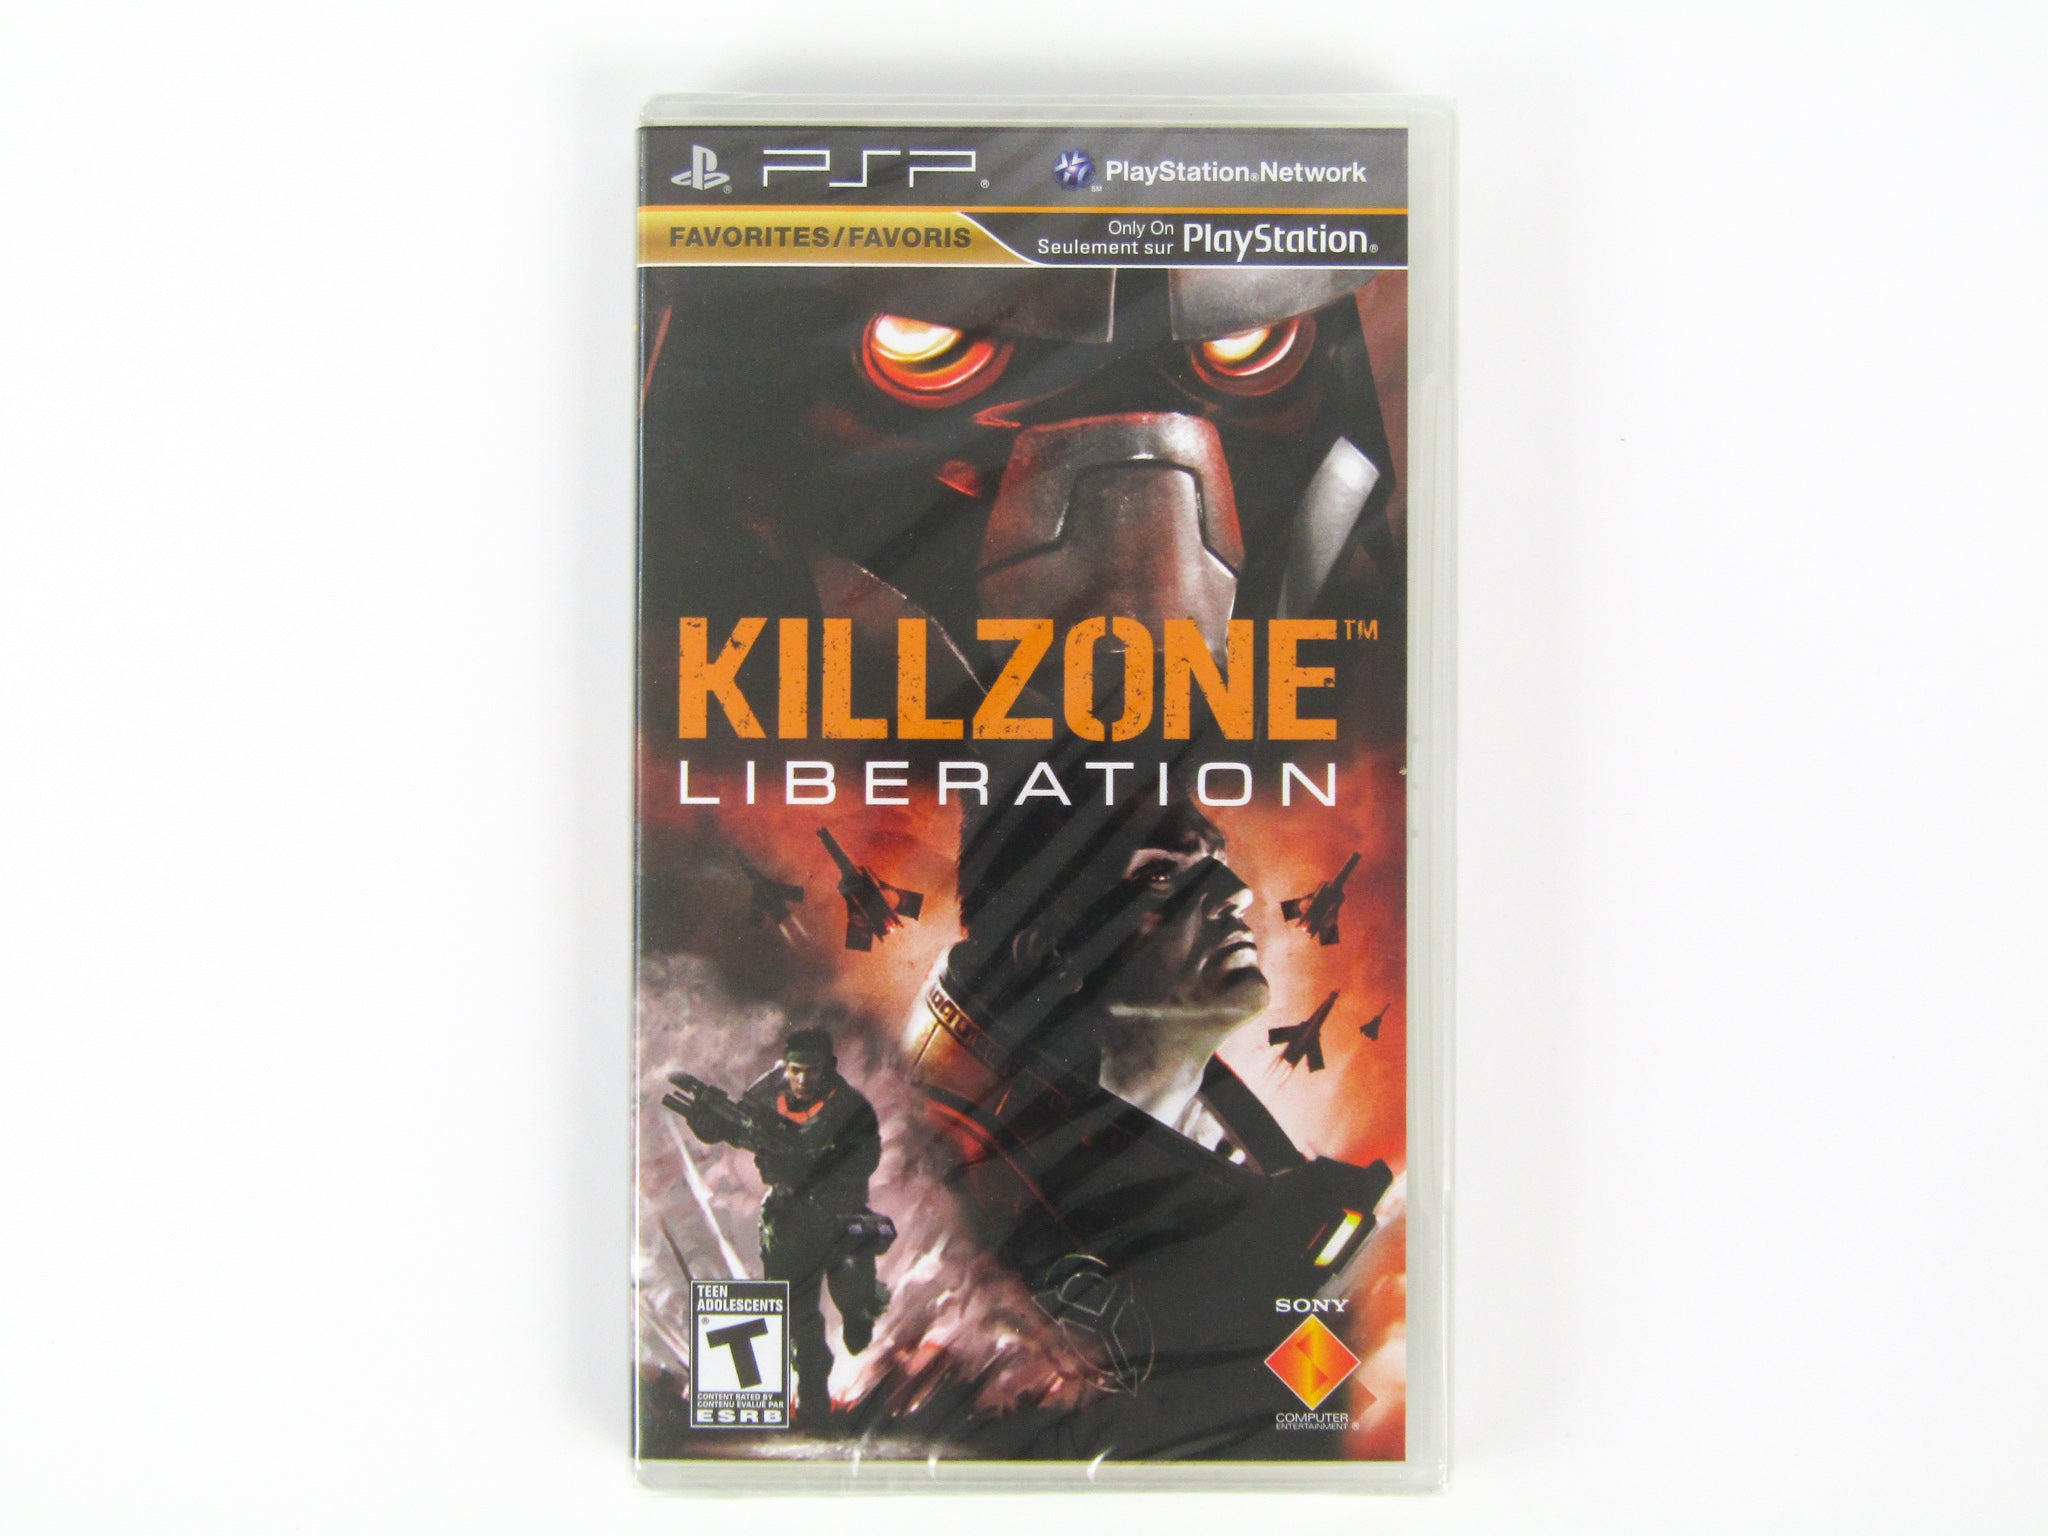 Killzone: Liberation and Syphon Filter: Logan's Shadow PSP UMD Dual Pack